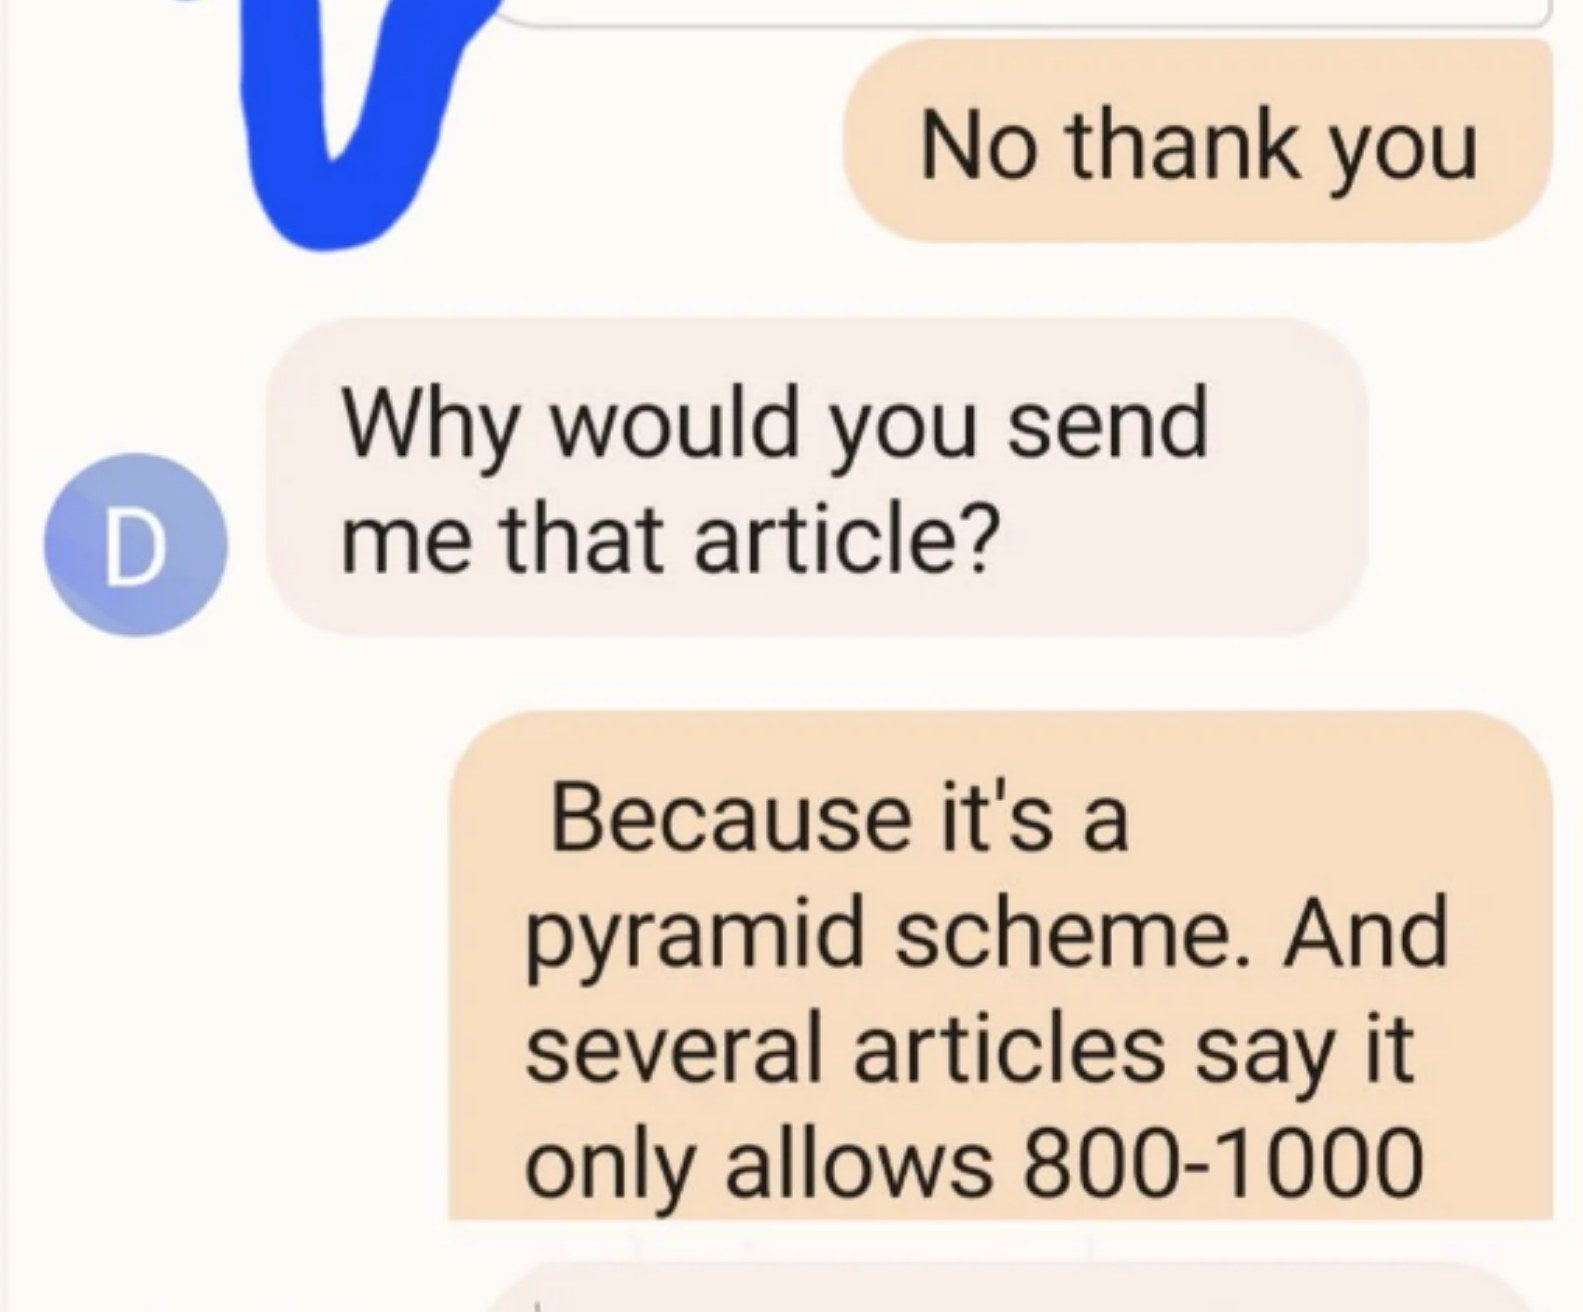 Screenshot of a text exchange